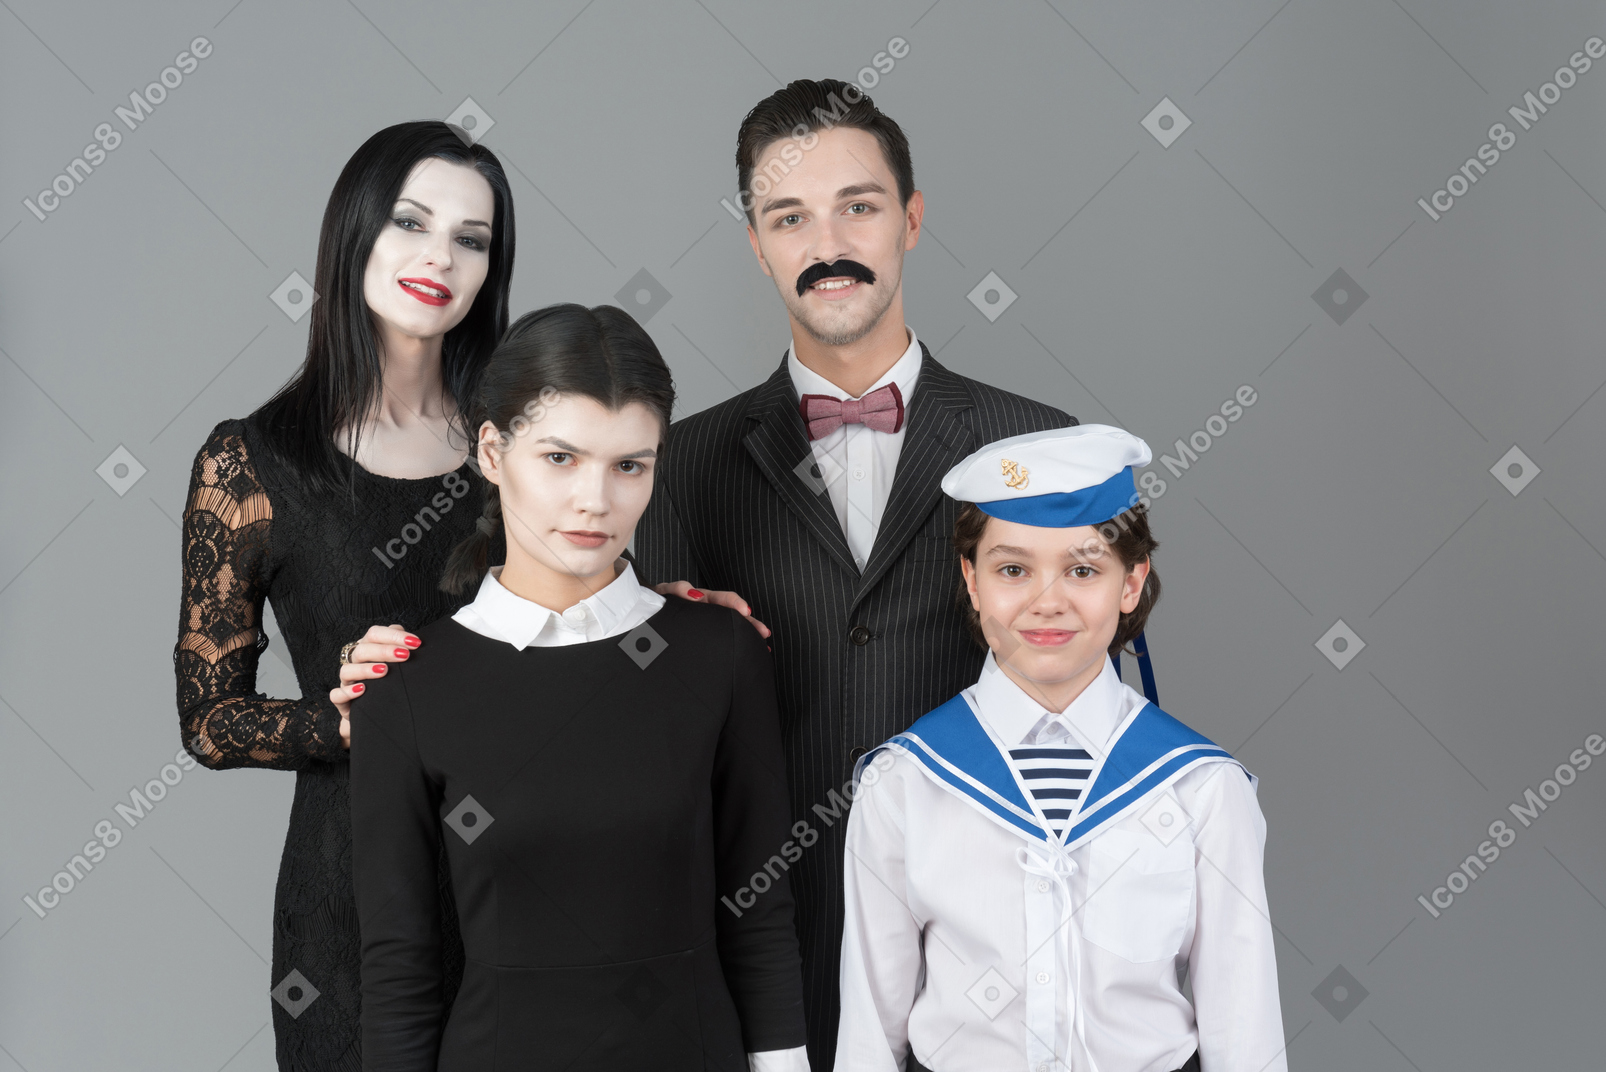 Addams familienfoto